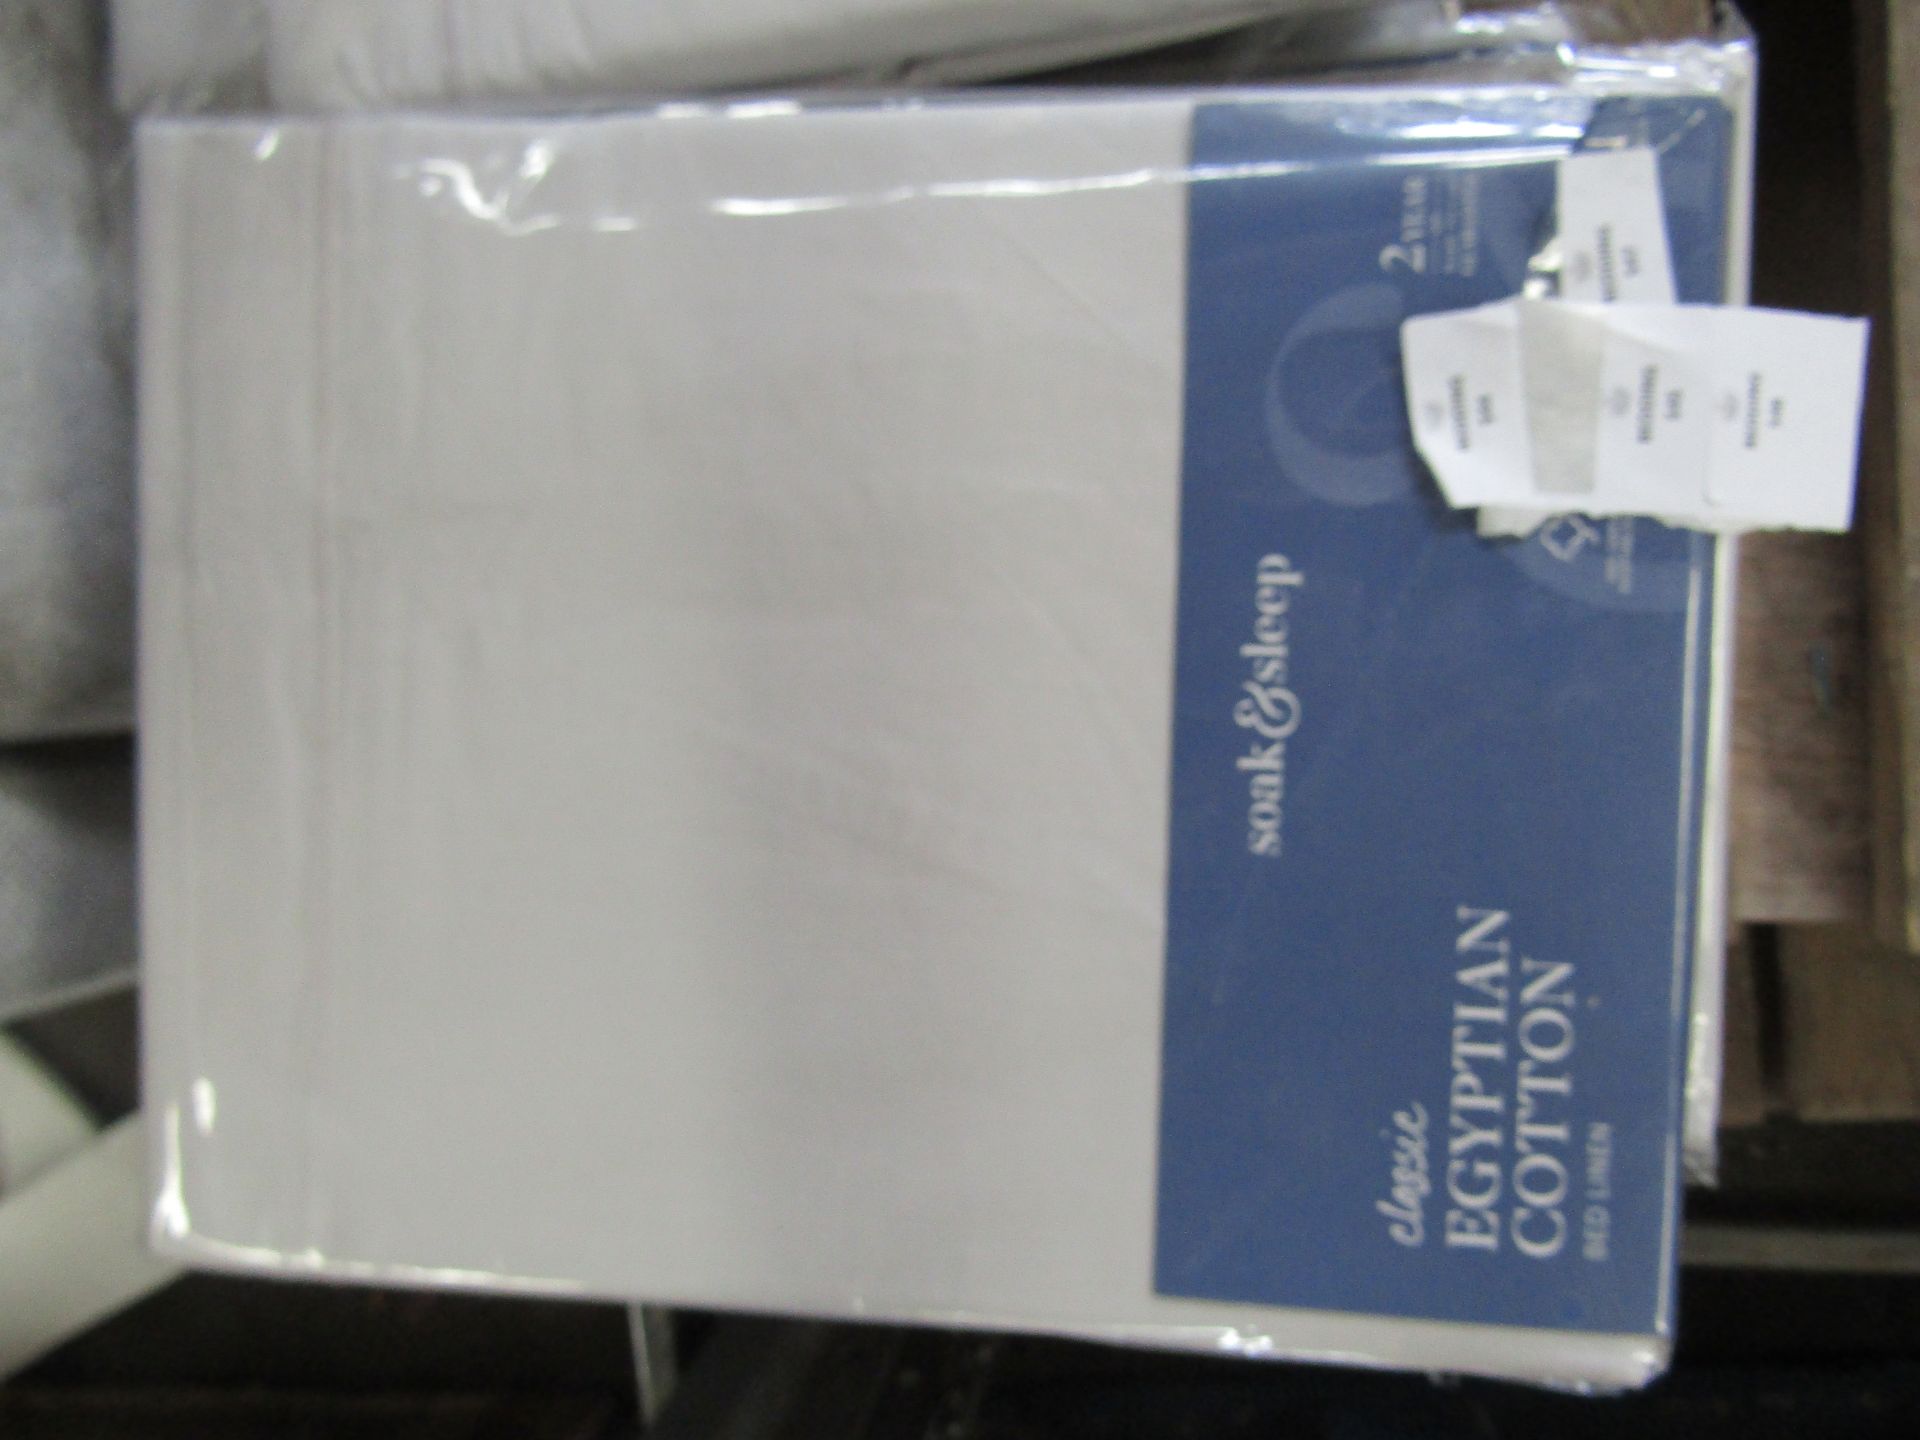 Soak & Sleep Soak & Sleep Silver Grey 200TC Egyptian Cotton Single Duvet Cover RRP 22 Enhance your - Image 2 of 2